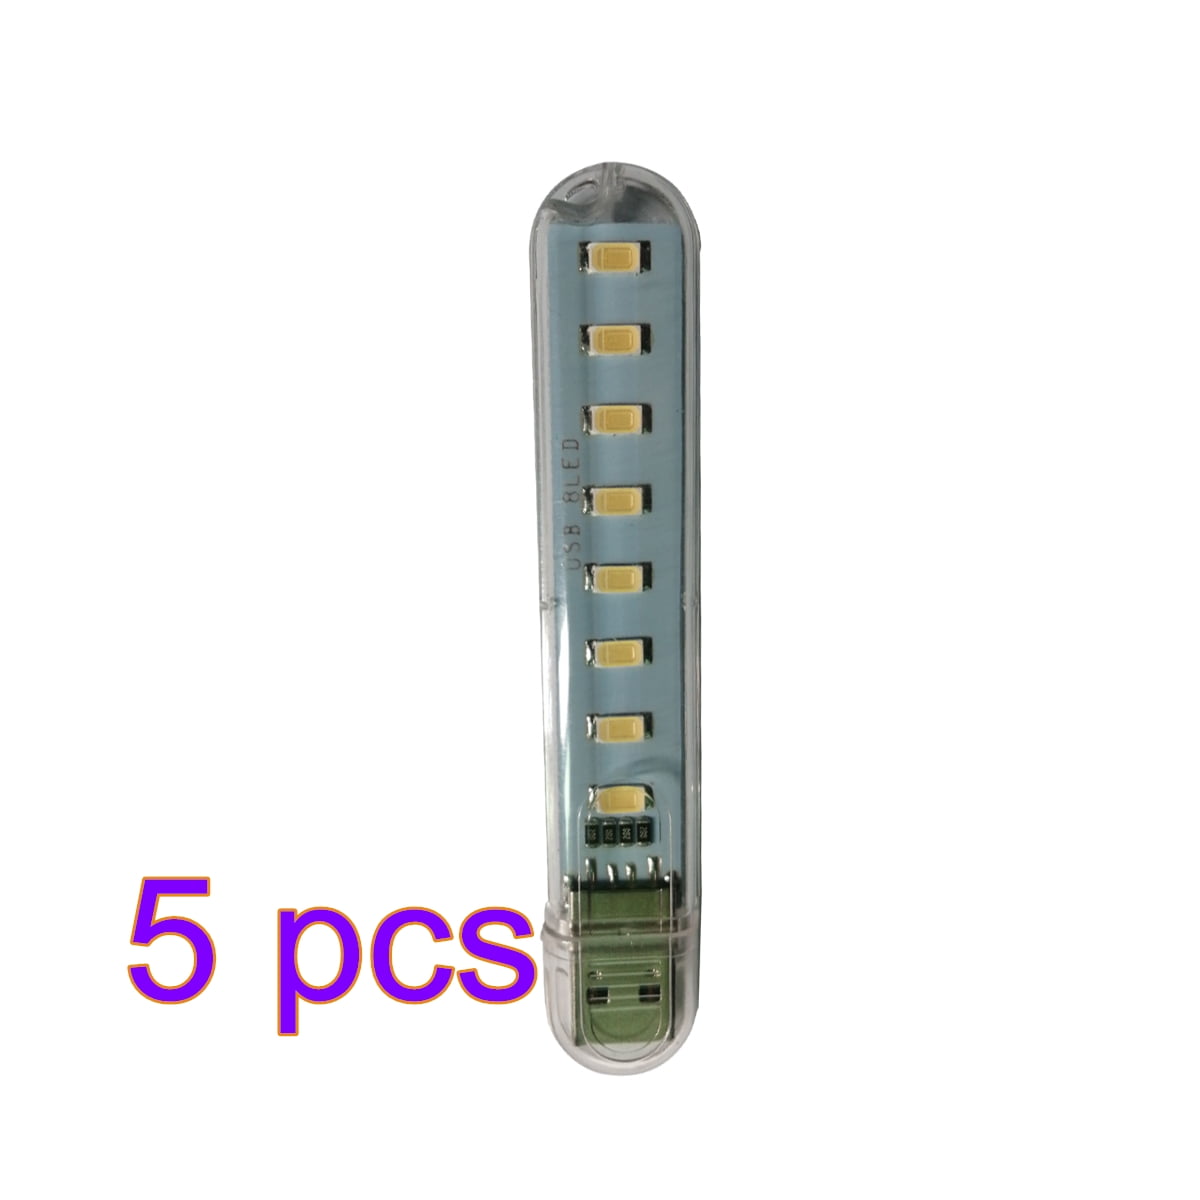 5 pcs Super Bright LED Night Light Pocket Torch Lamp Led Keychain Lamp USB Power 